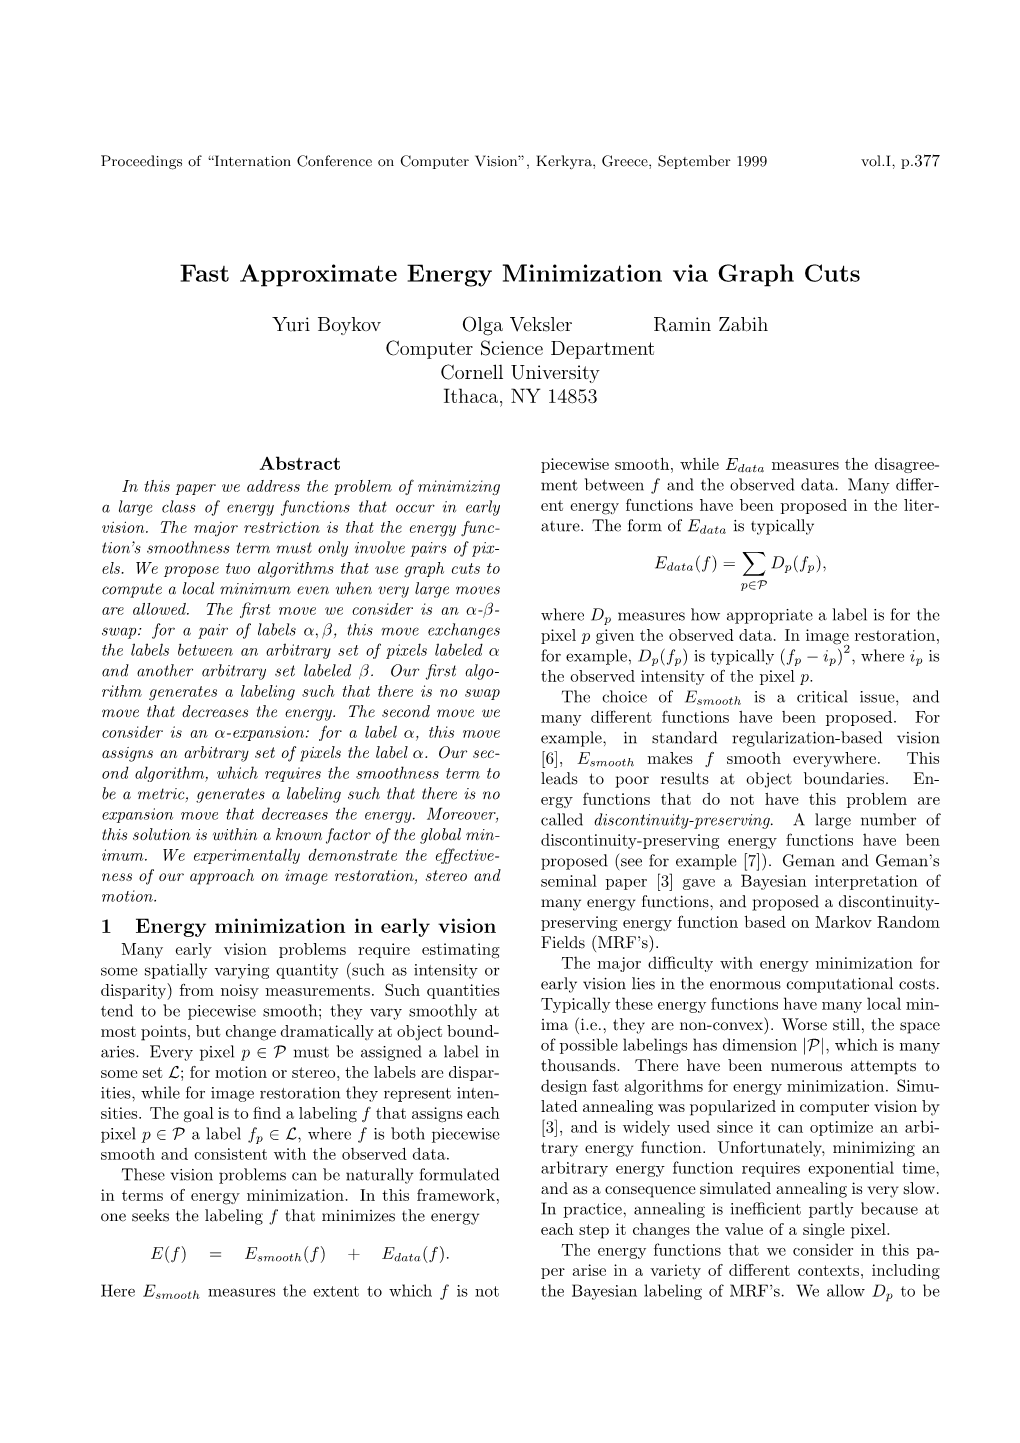 Fast Approximate Energy Minimization Via Graph Cuts